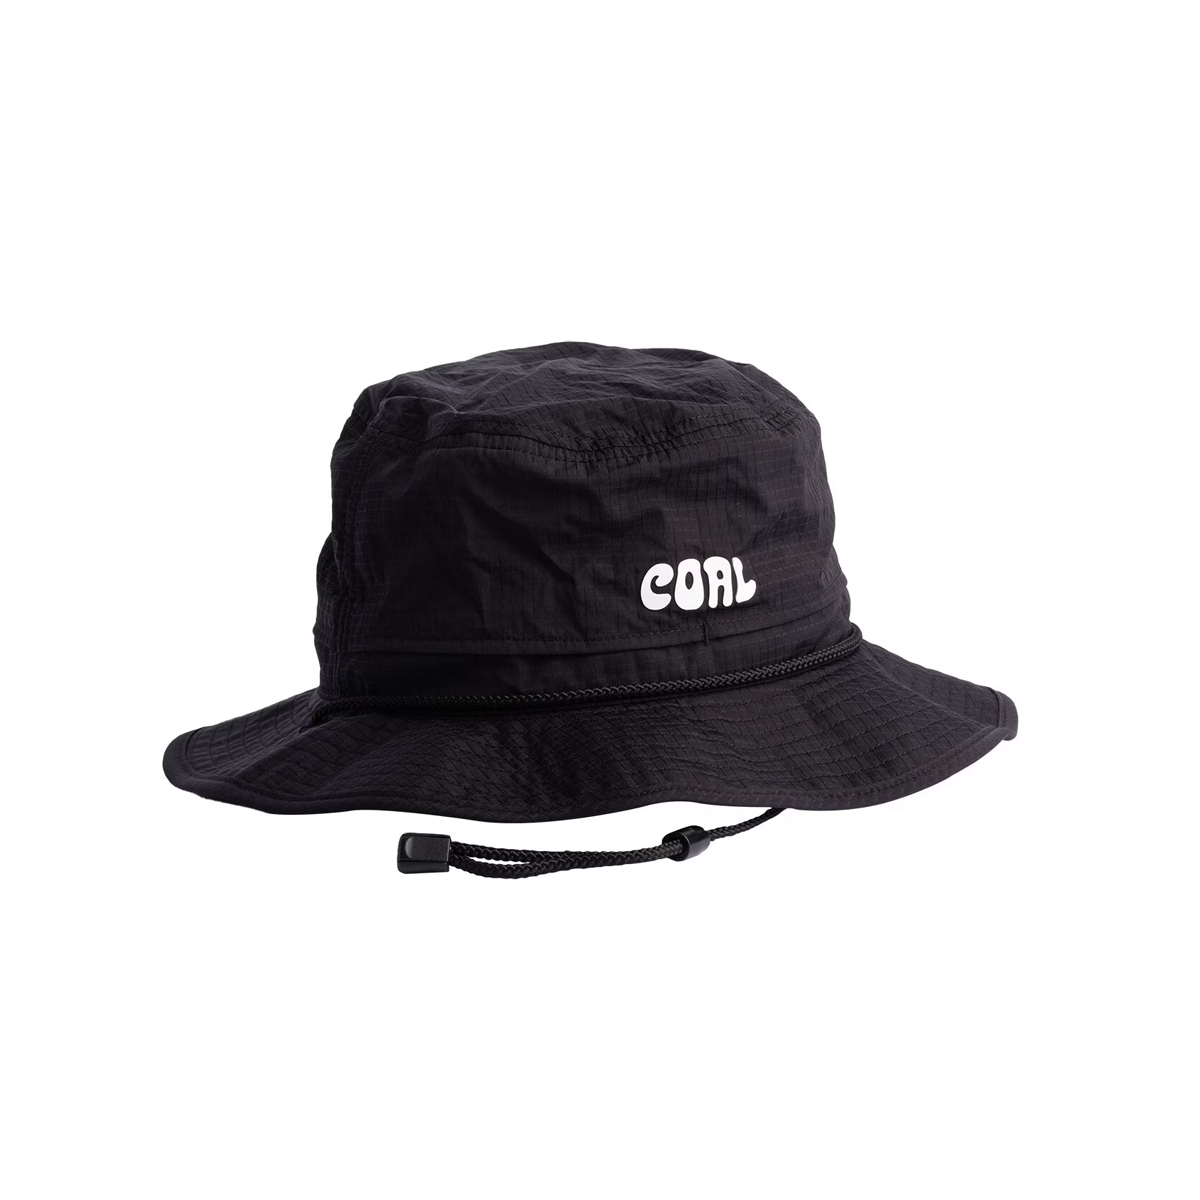 Coal Traverse Bucket Hat - Black